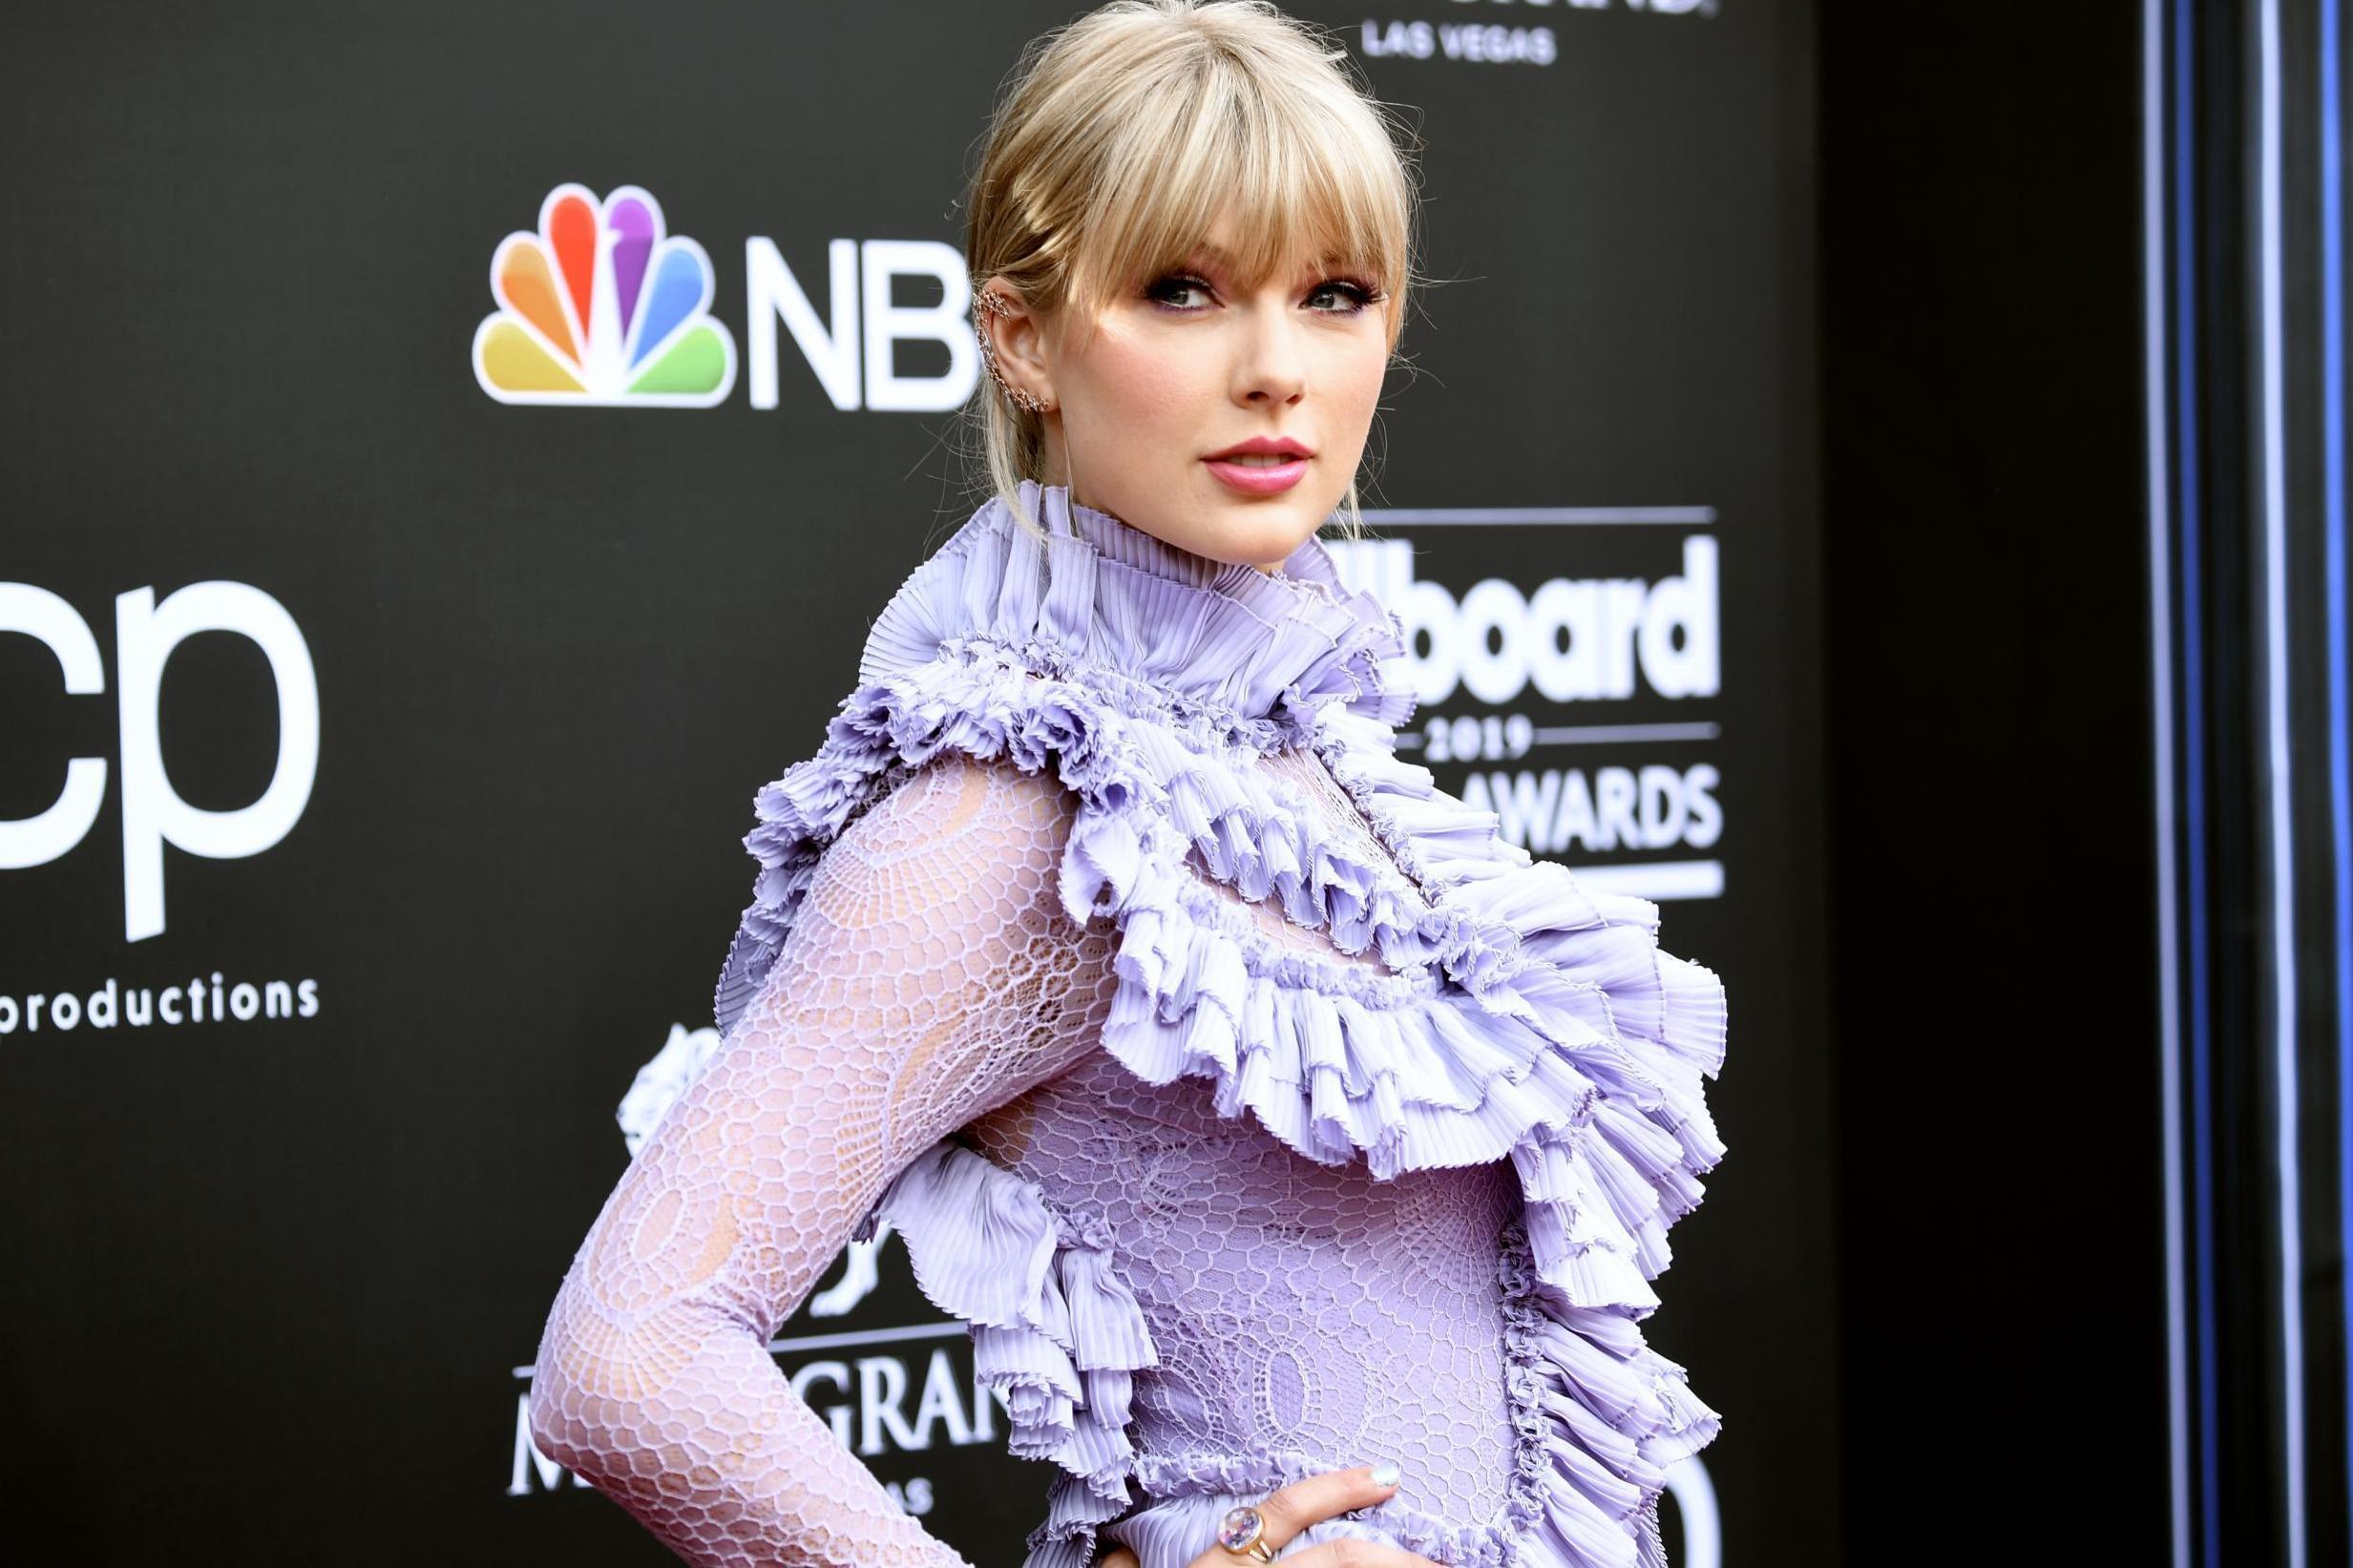 Taylor Swift Fans Notice Typo On Singers New Merchandise